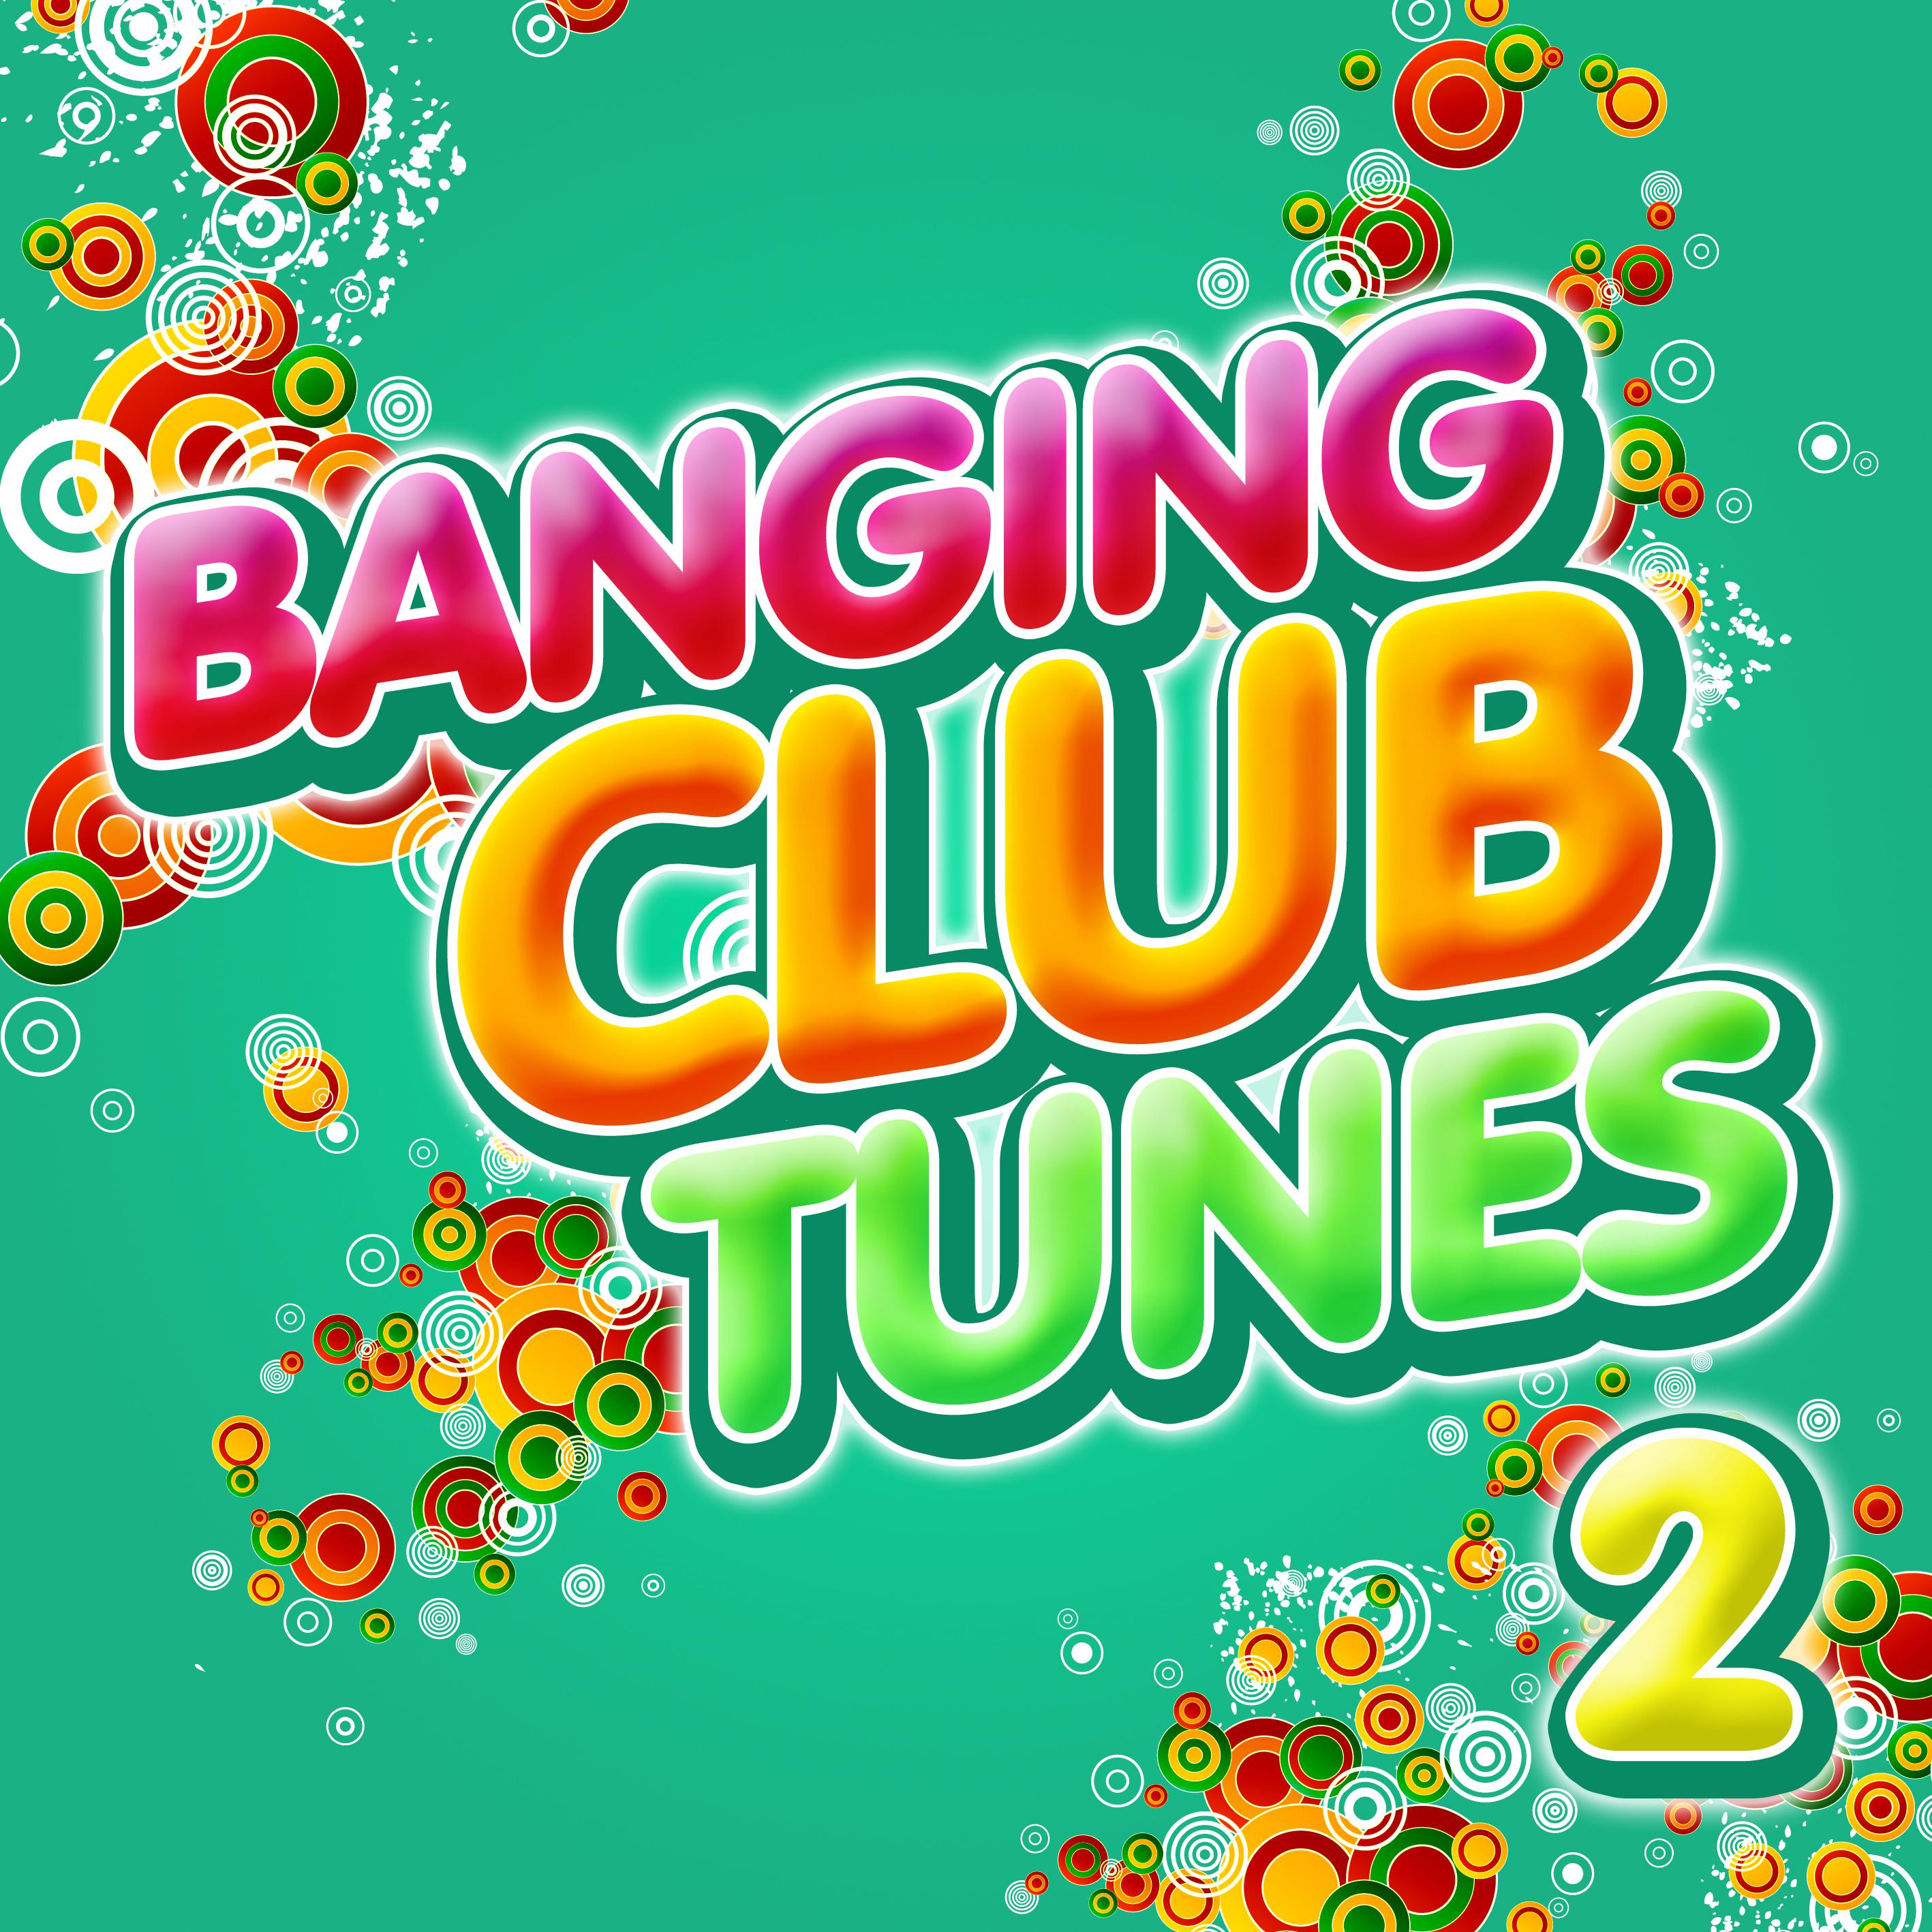 Banging Club Tunes 2